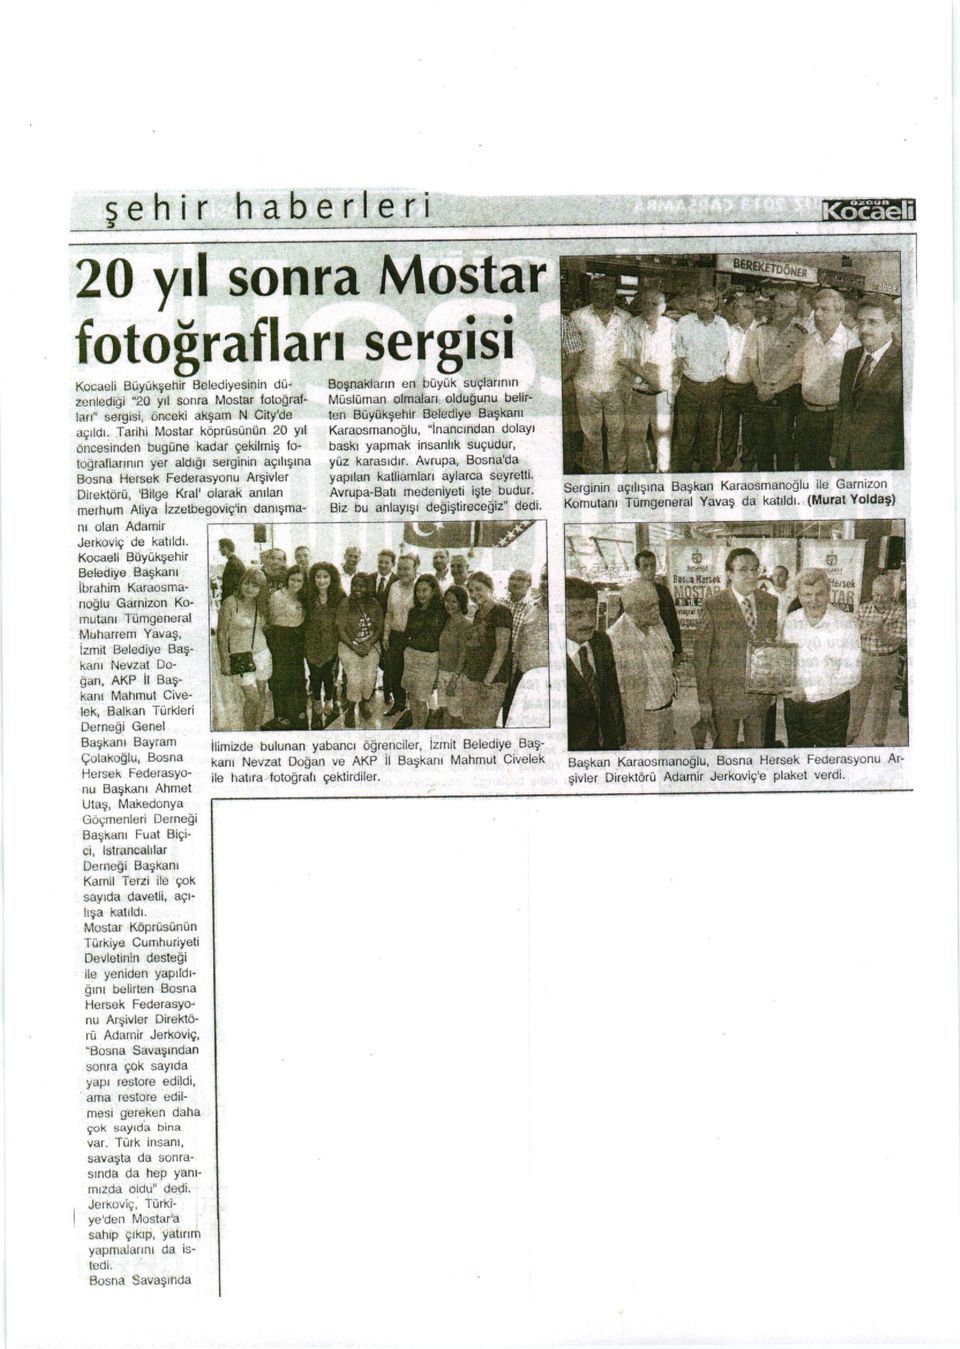 T;rihi Mostar koprisuniin 20 yll Karaosmanoolu, "inanclndan dolayl oncesinden bugiine kadar gekilmig fo- baskl yapmak insanhk suqudur, tograflannrn yer aldrol serginin a9lllllna ytiz karasrdlr.